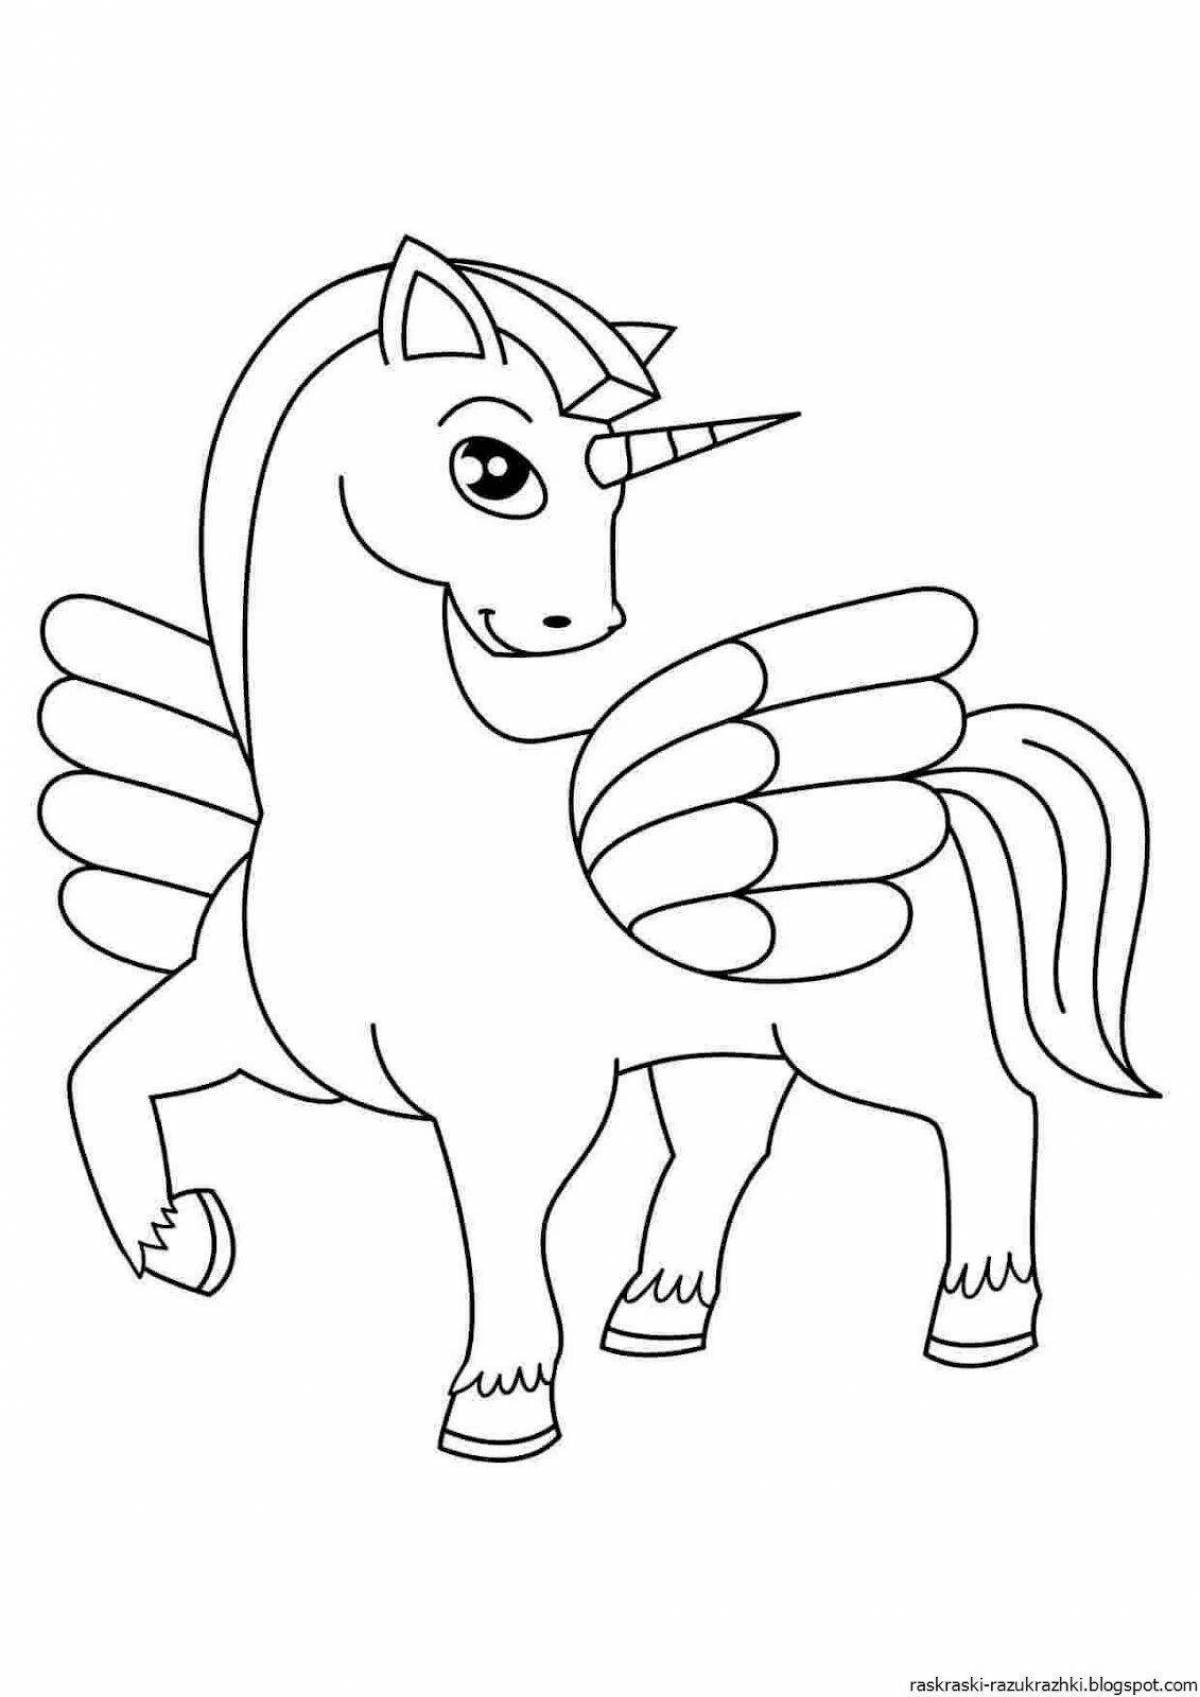 Royal coloring unicorn for kids 4 5